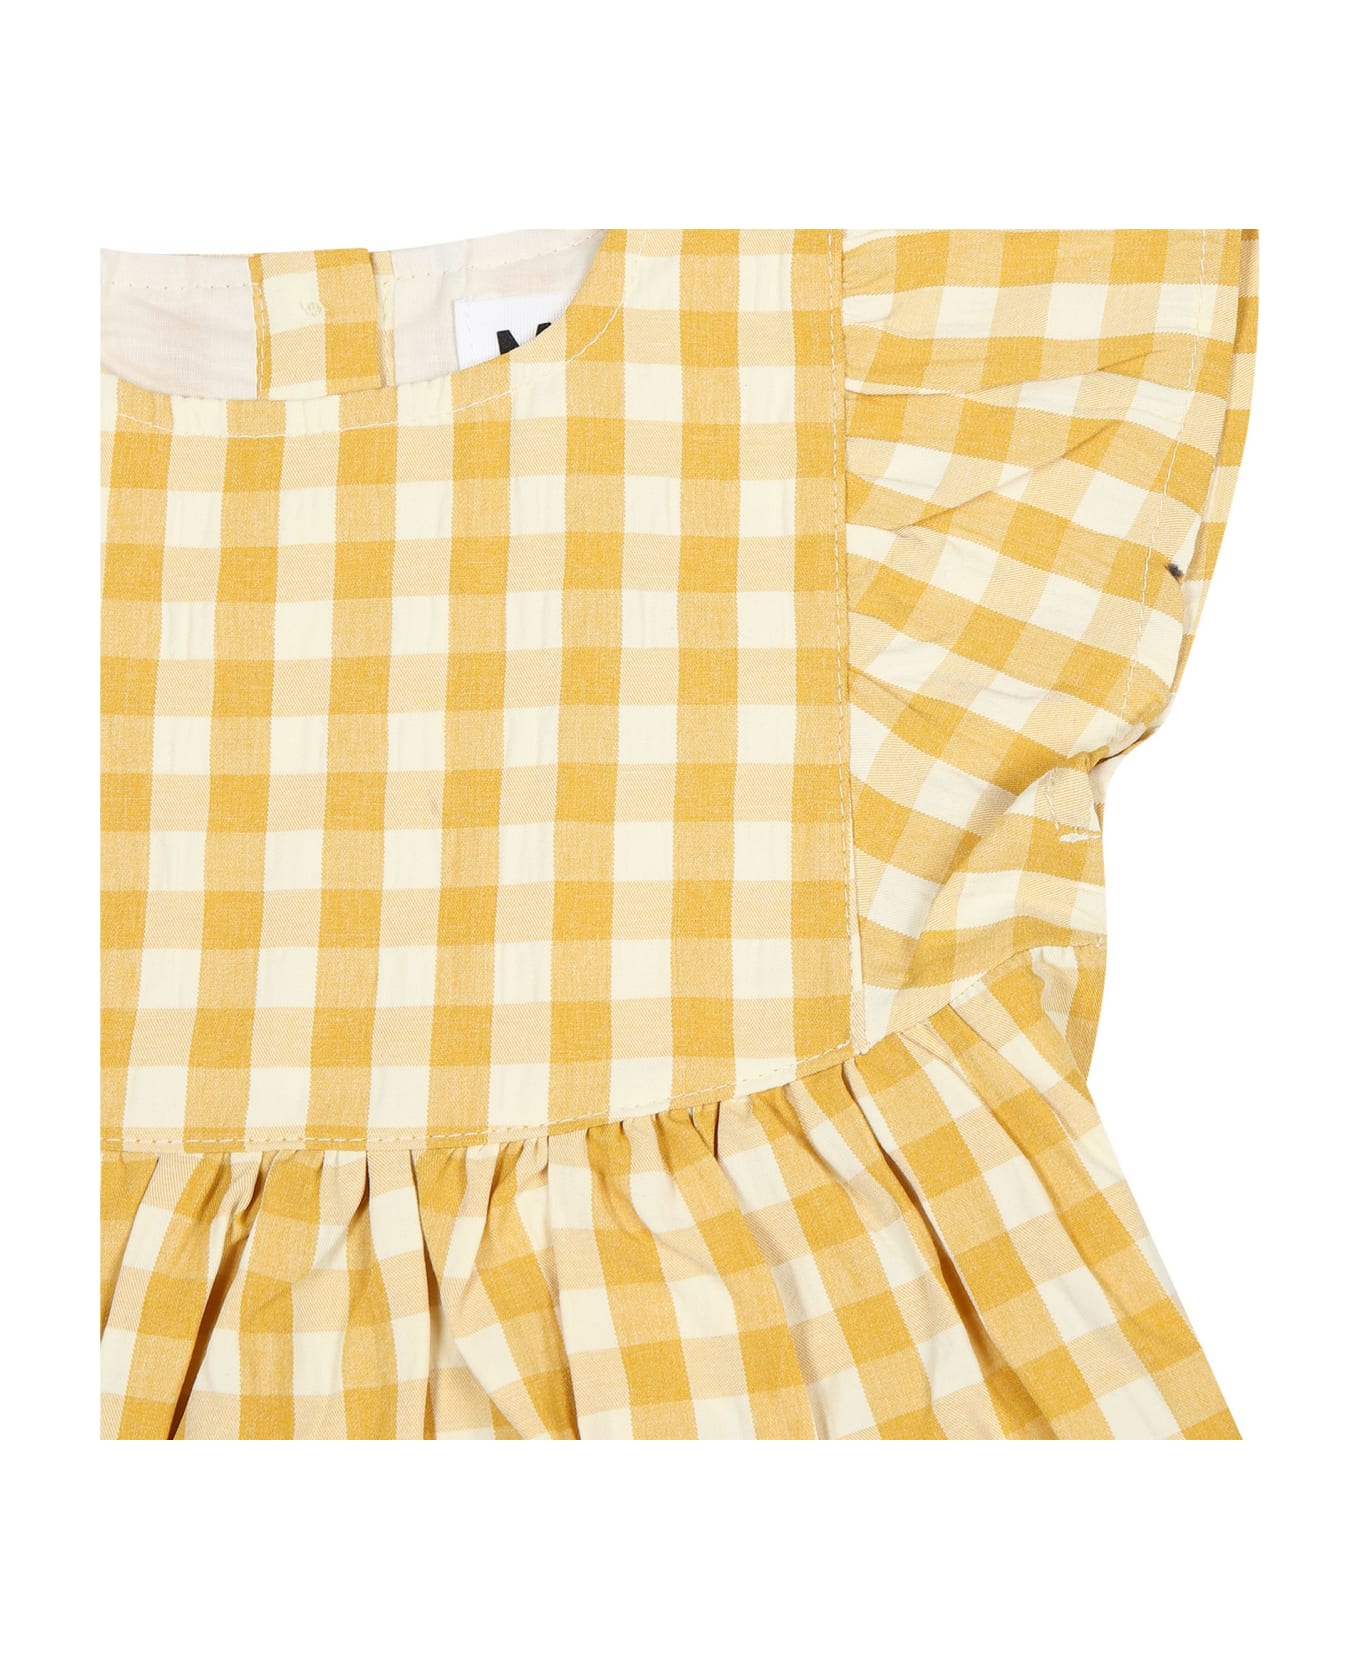 Molo Casual Yellow Dress Chantal For Baby Girl - Yellow ウェア